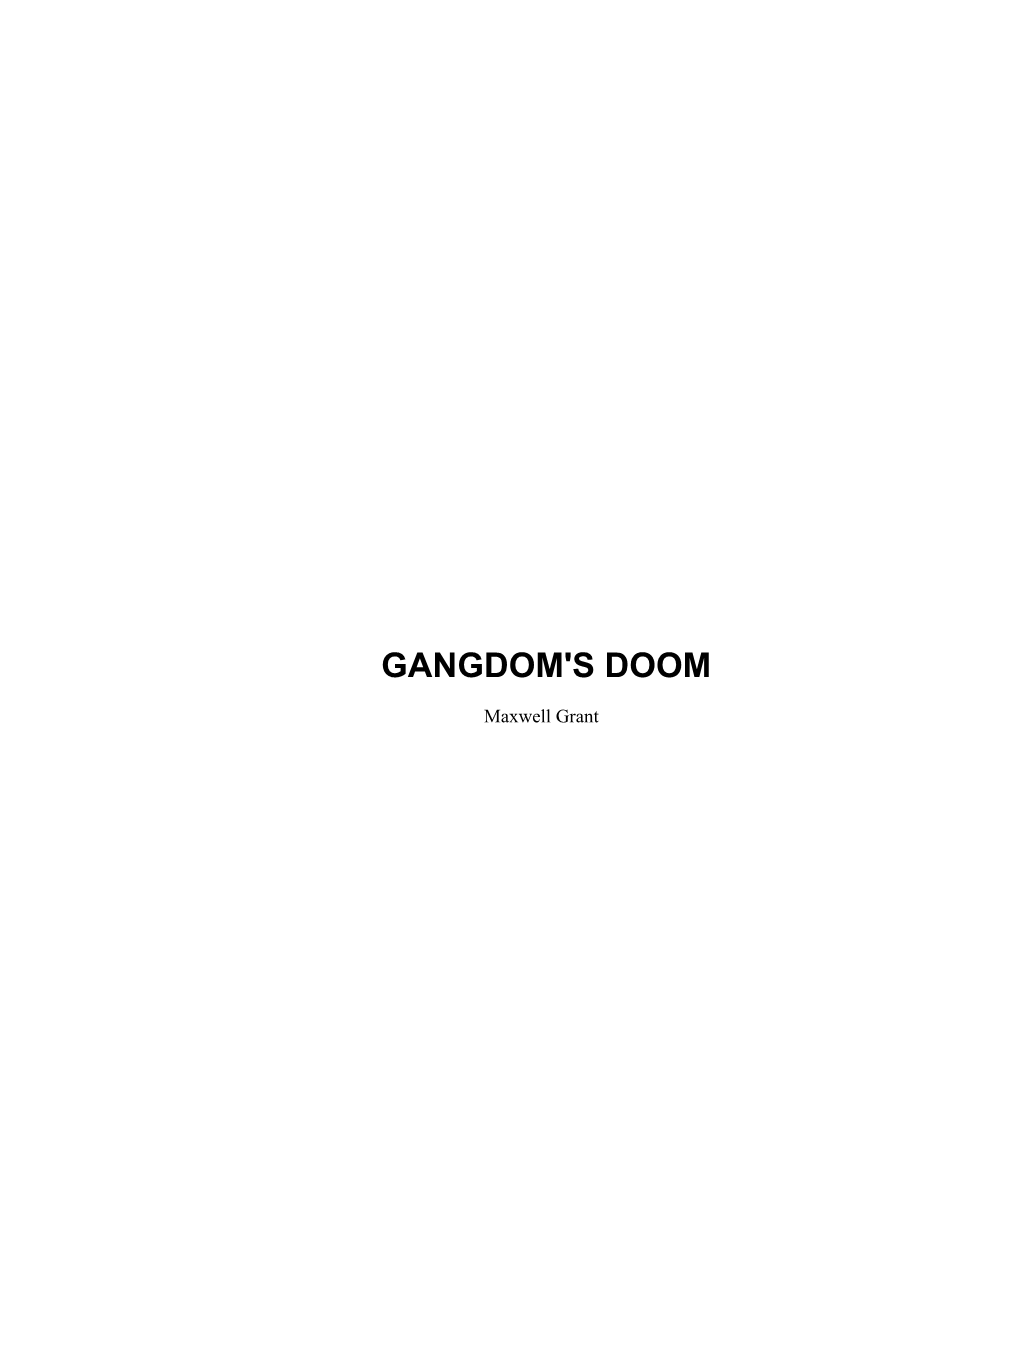 Gangdom's Doom